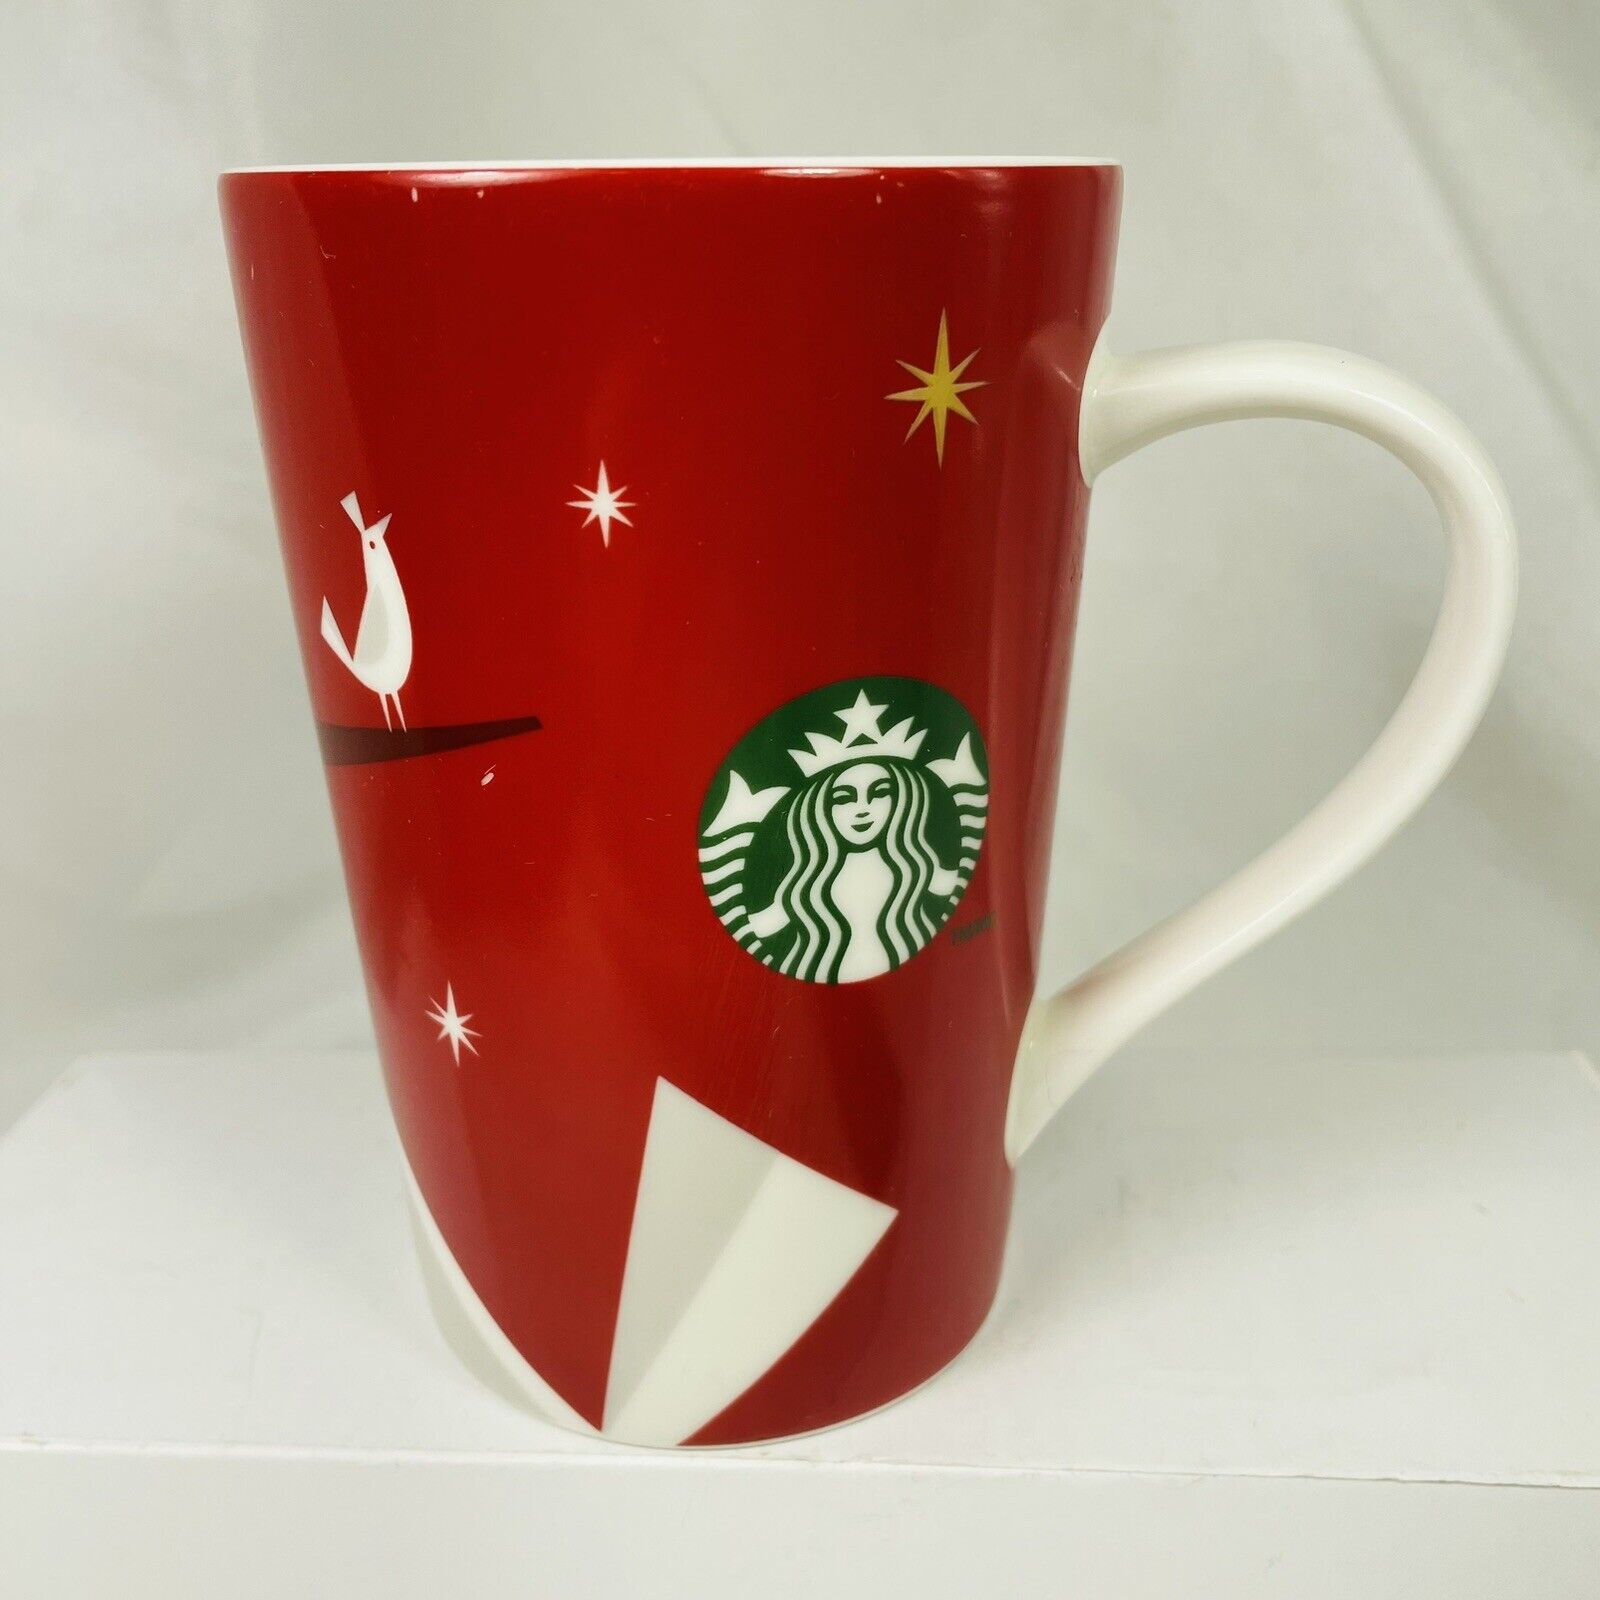 2012 Starbucks Holiday 12 Ounce Coffe Tea Cup Mug Microwave Red Green White